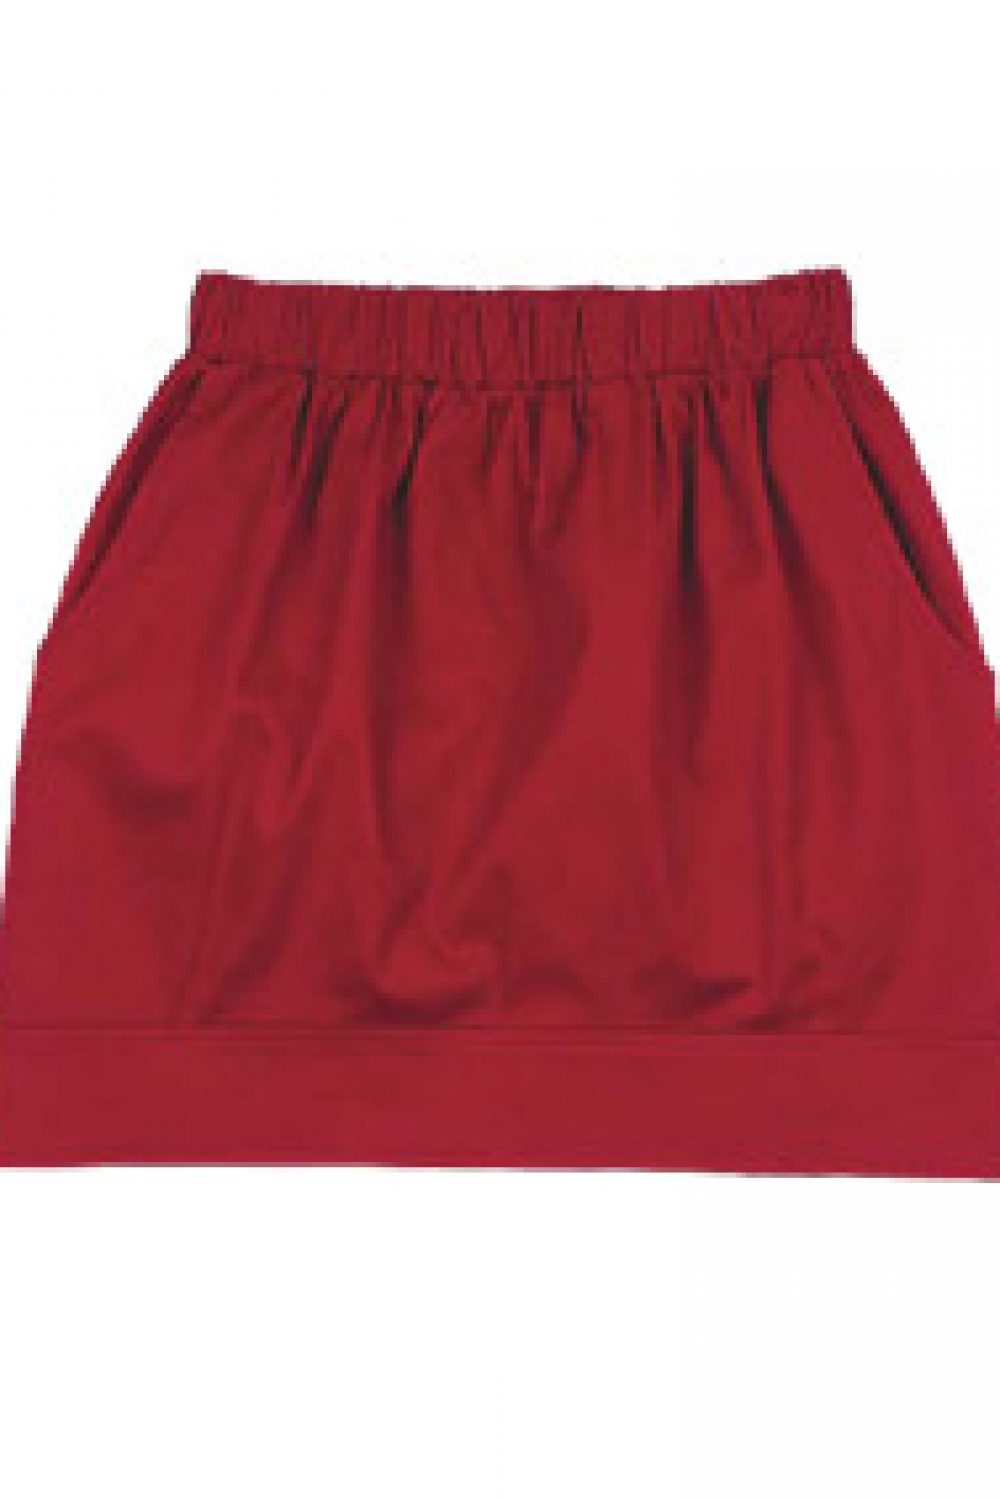 Lauren Conrad Hearts High-Waisted Skirts (and so do I!)